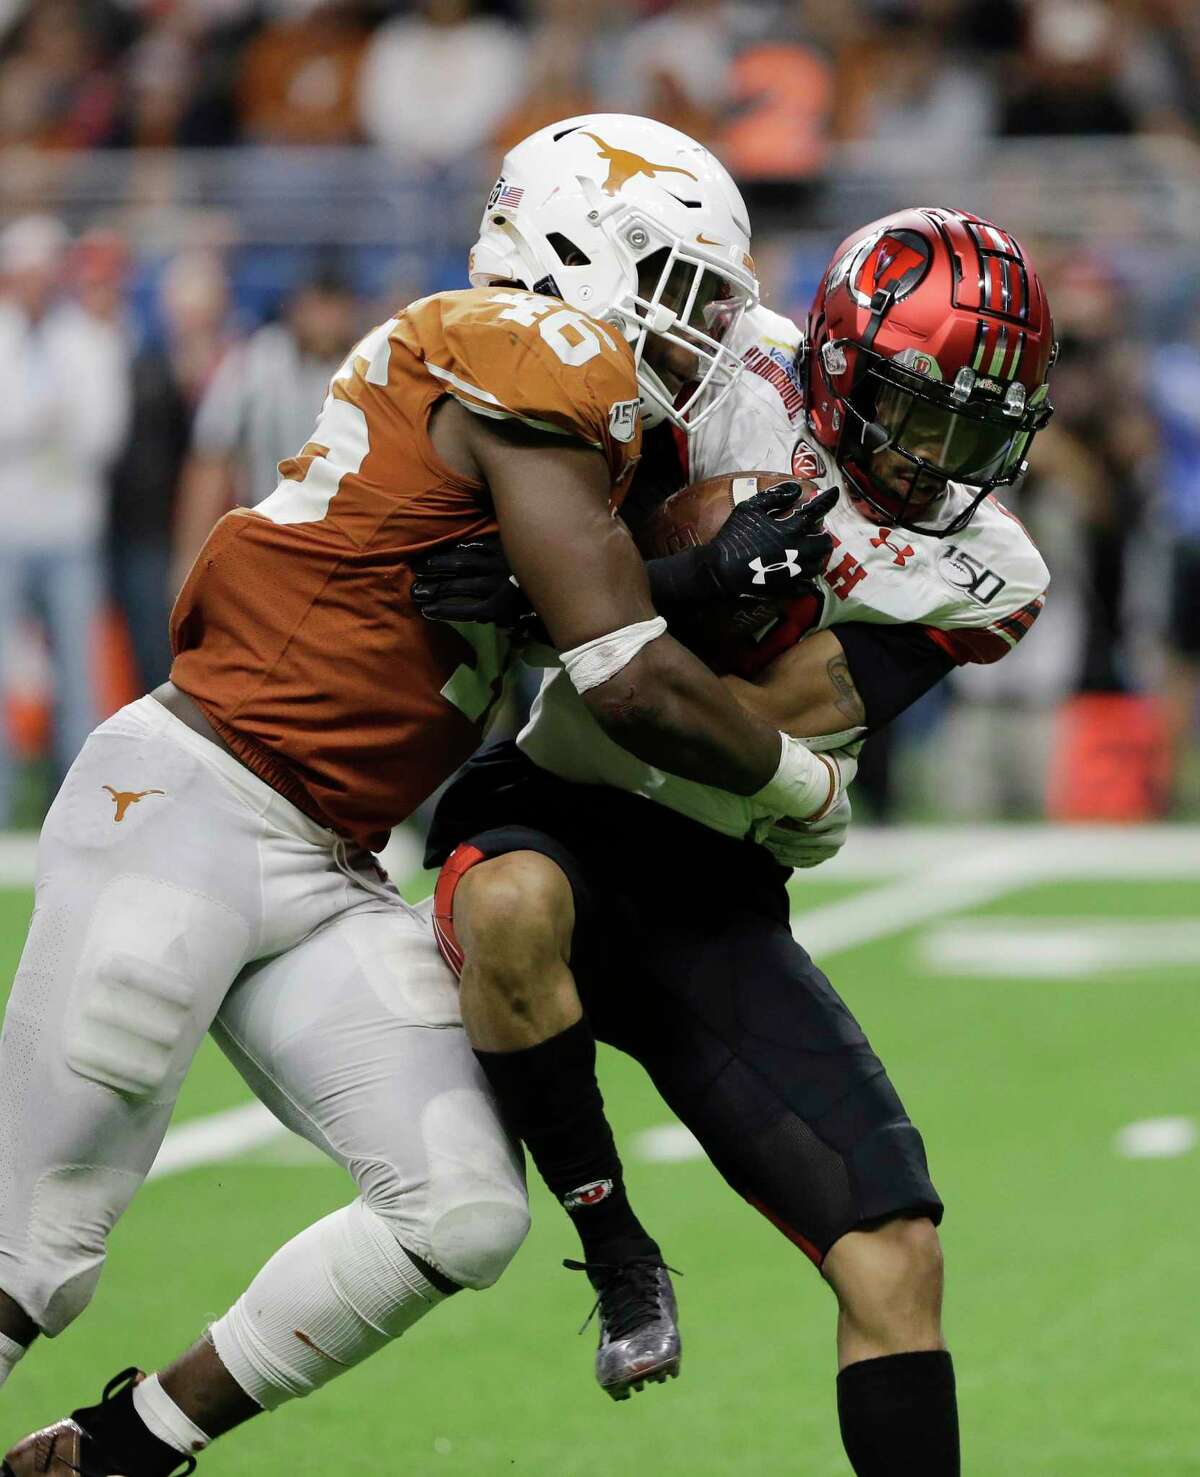 Texas linebacker Joseph Ossai (46) hits Utah wide receiver Derrick Vickers (8) during the second half of the Alamo Bowl NCAA college football game in San Antonio, Tuesday, Dec. 31, 2019. (AP Photo/Austin Gay)